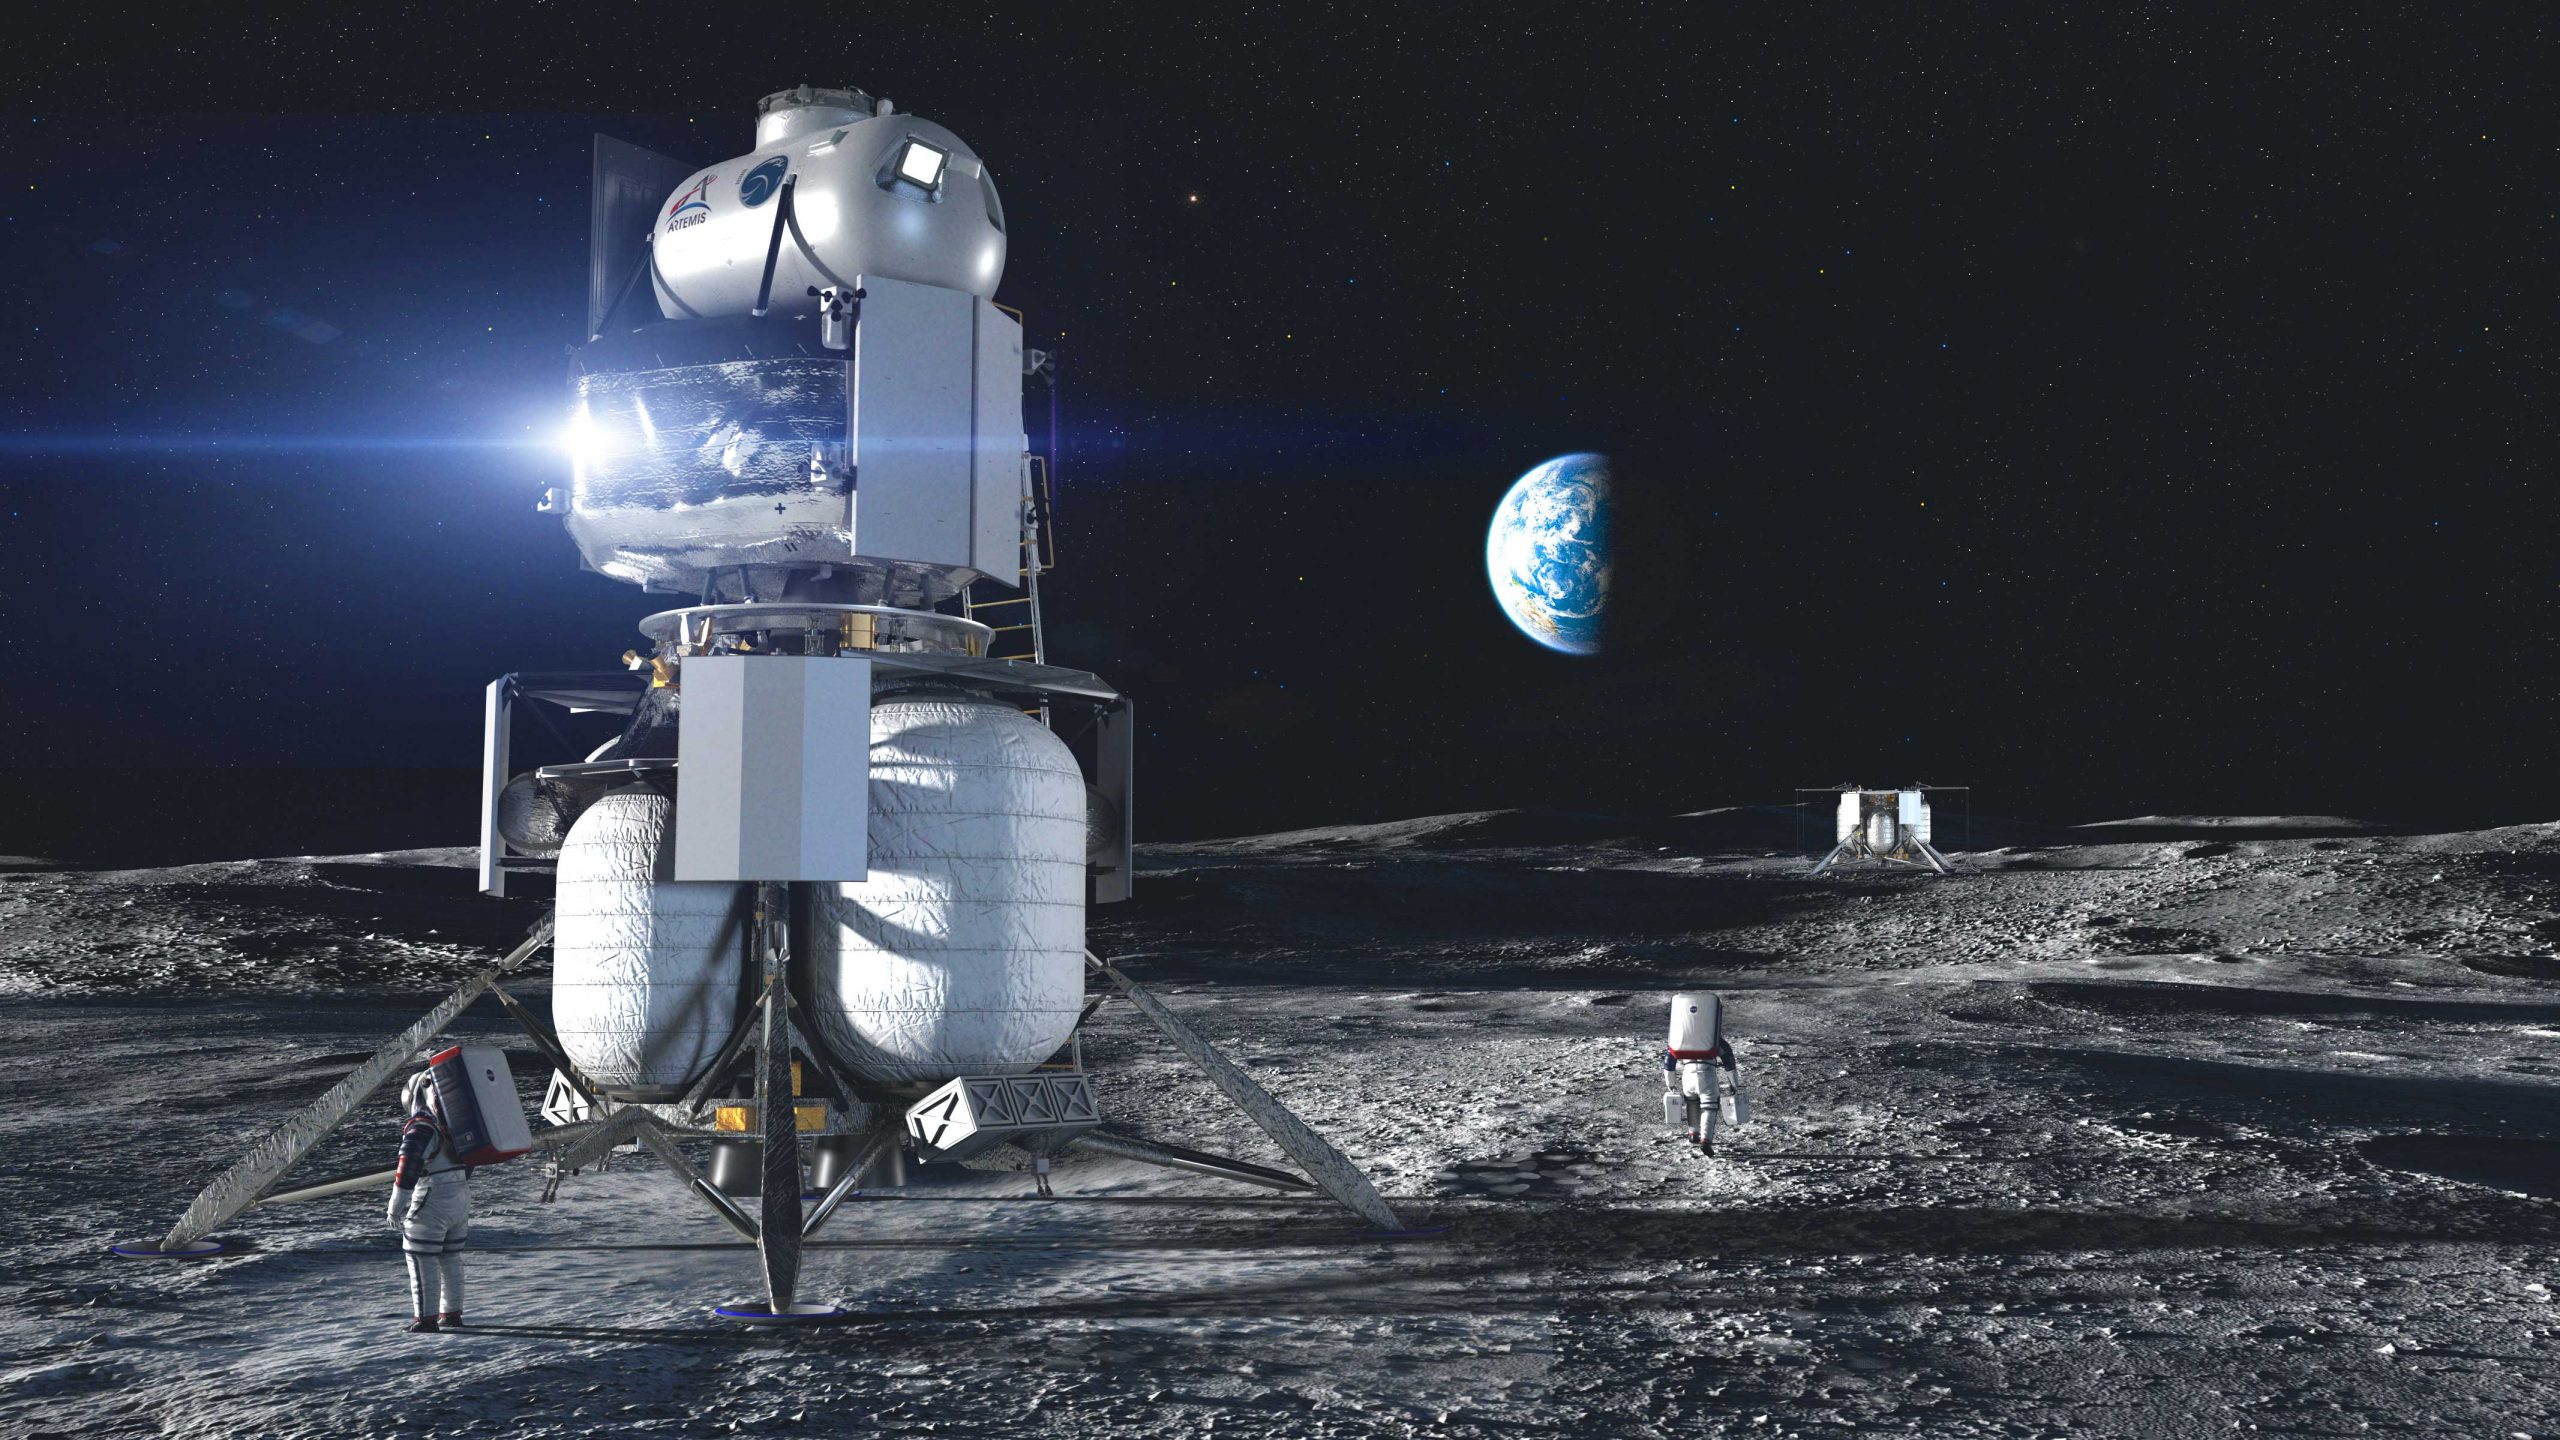 bezos offers astronaut lunar lander contract